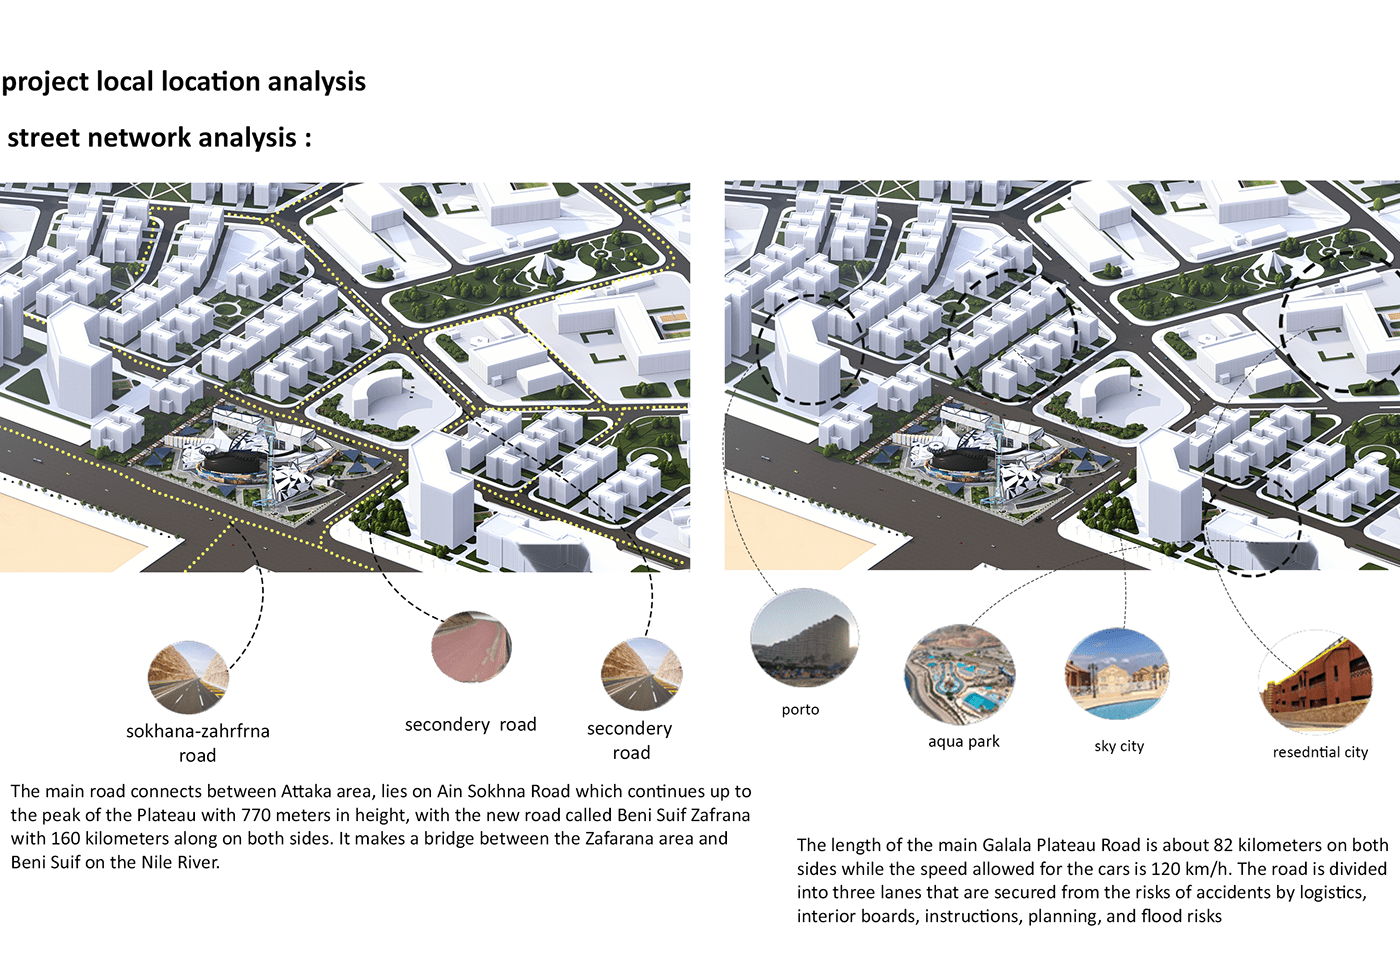 architectural architecture city exterior graduation graduation project Project Render Urban visualization